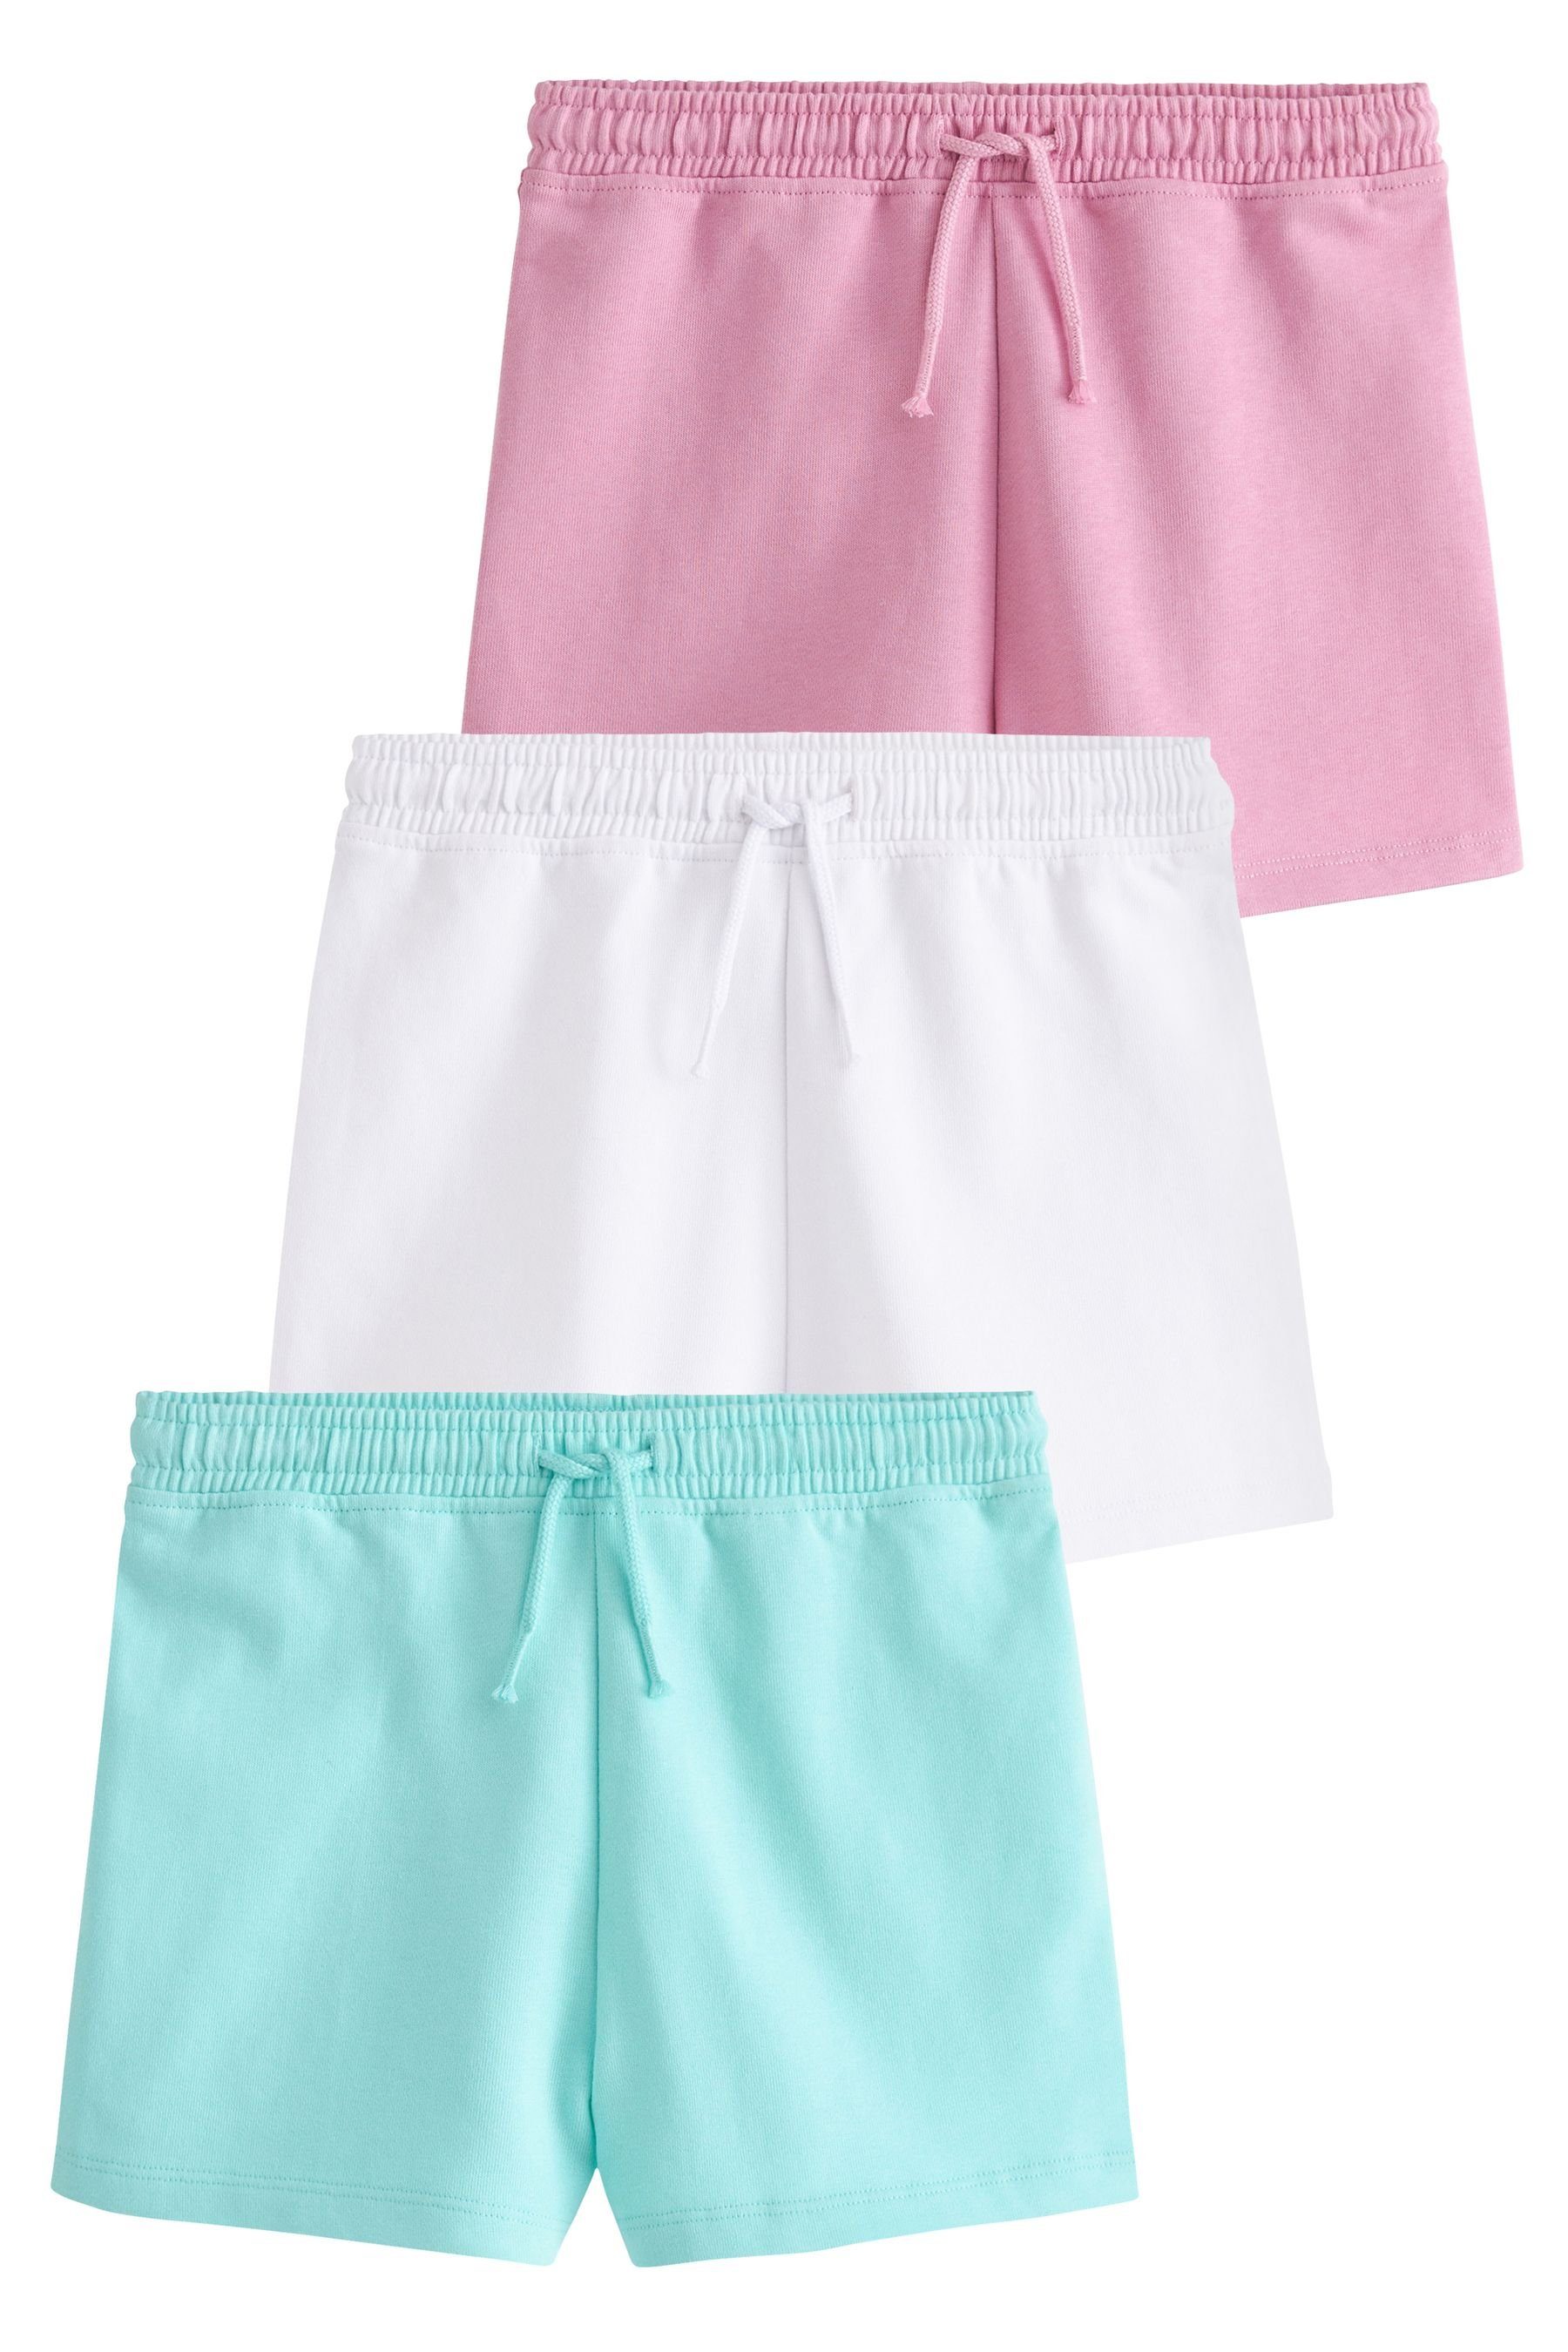 Next aus Shorts 3er-Pack Green/White Sweatshorts (3-tlg) Pastel Baumwolljersey, Pink/Mint